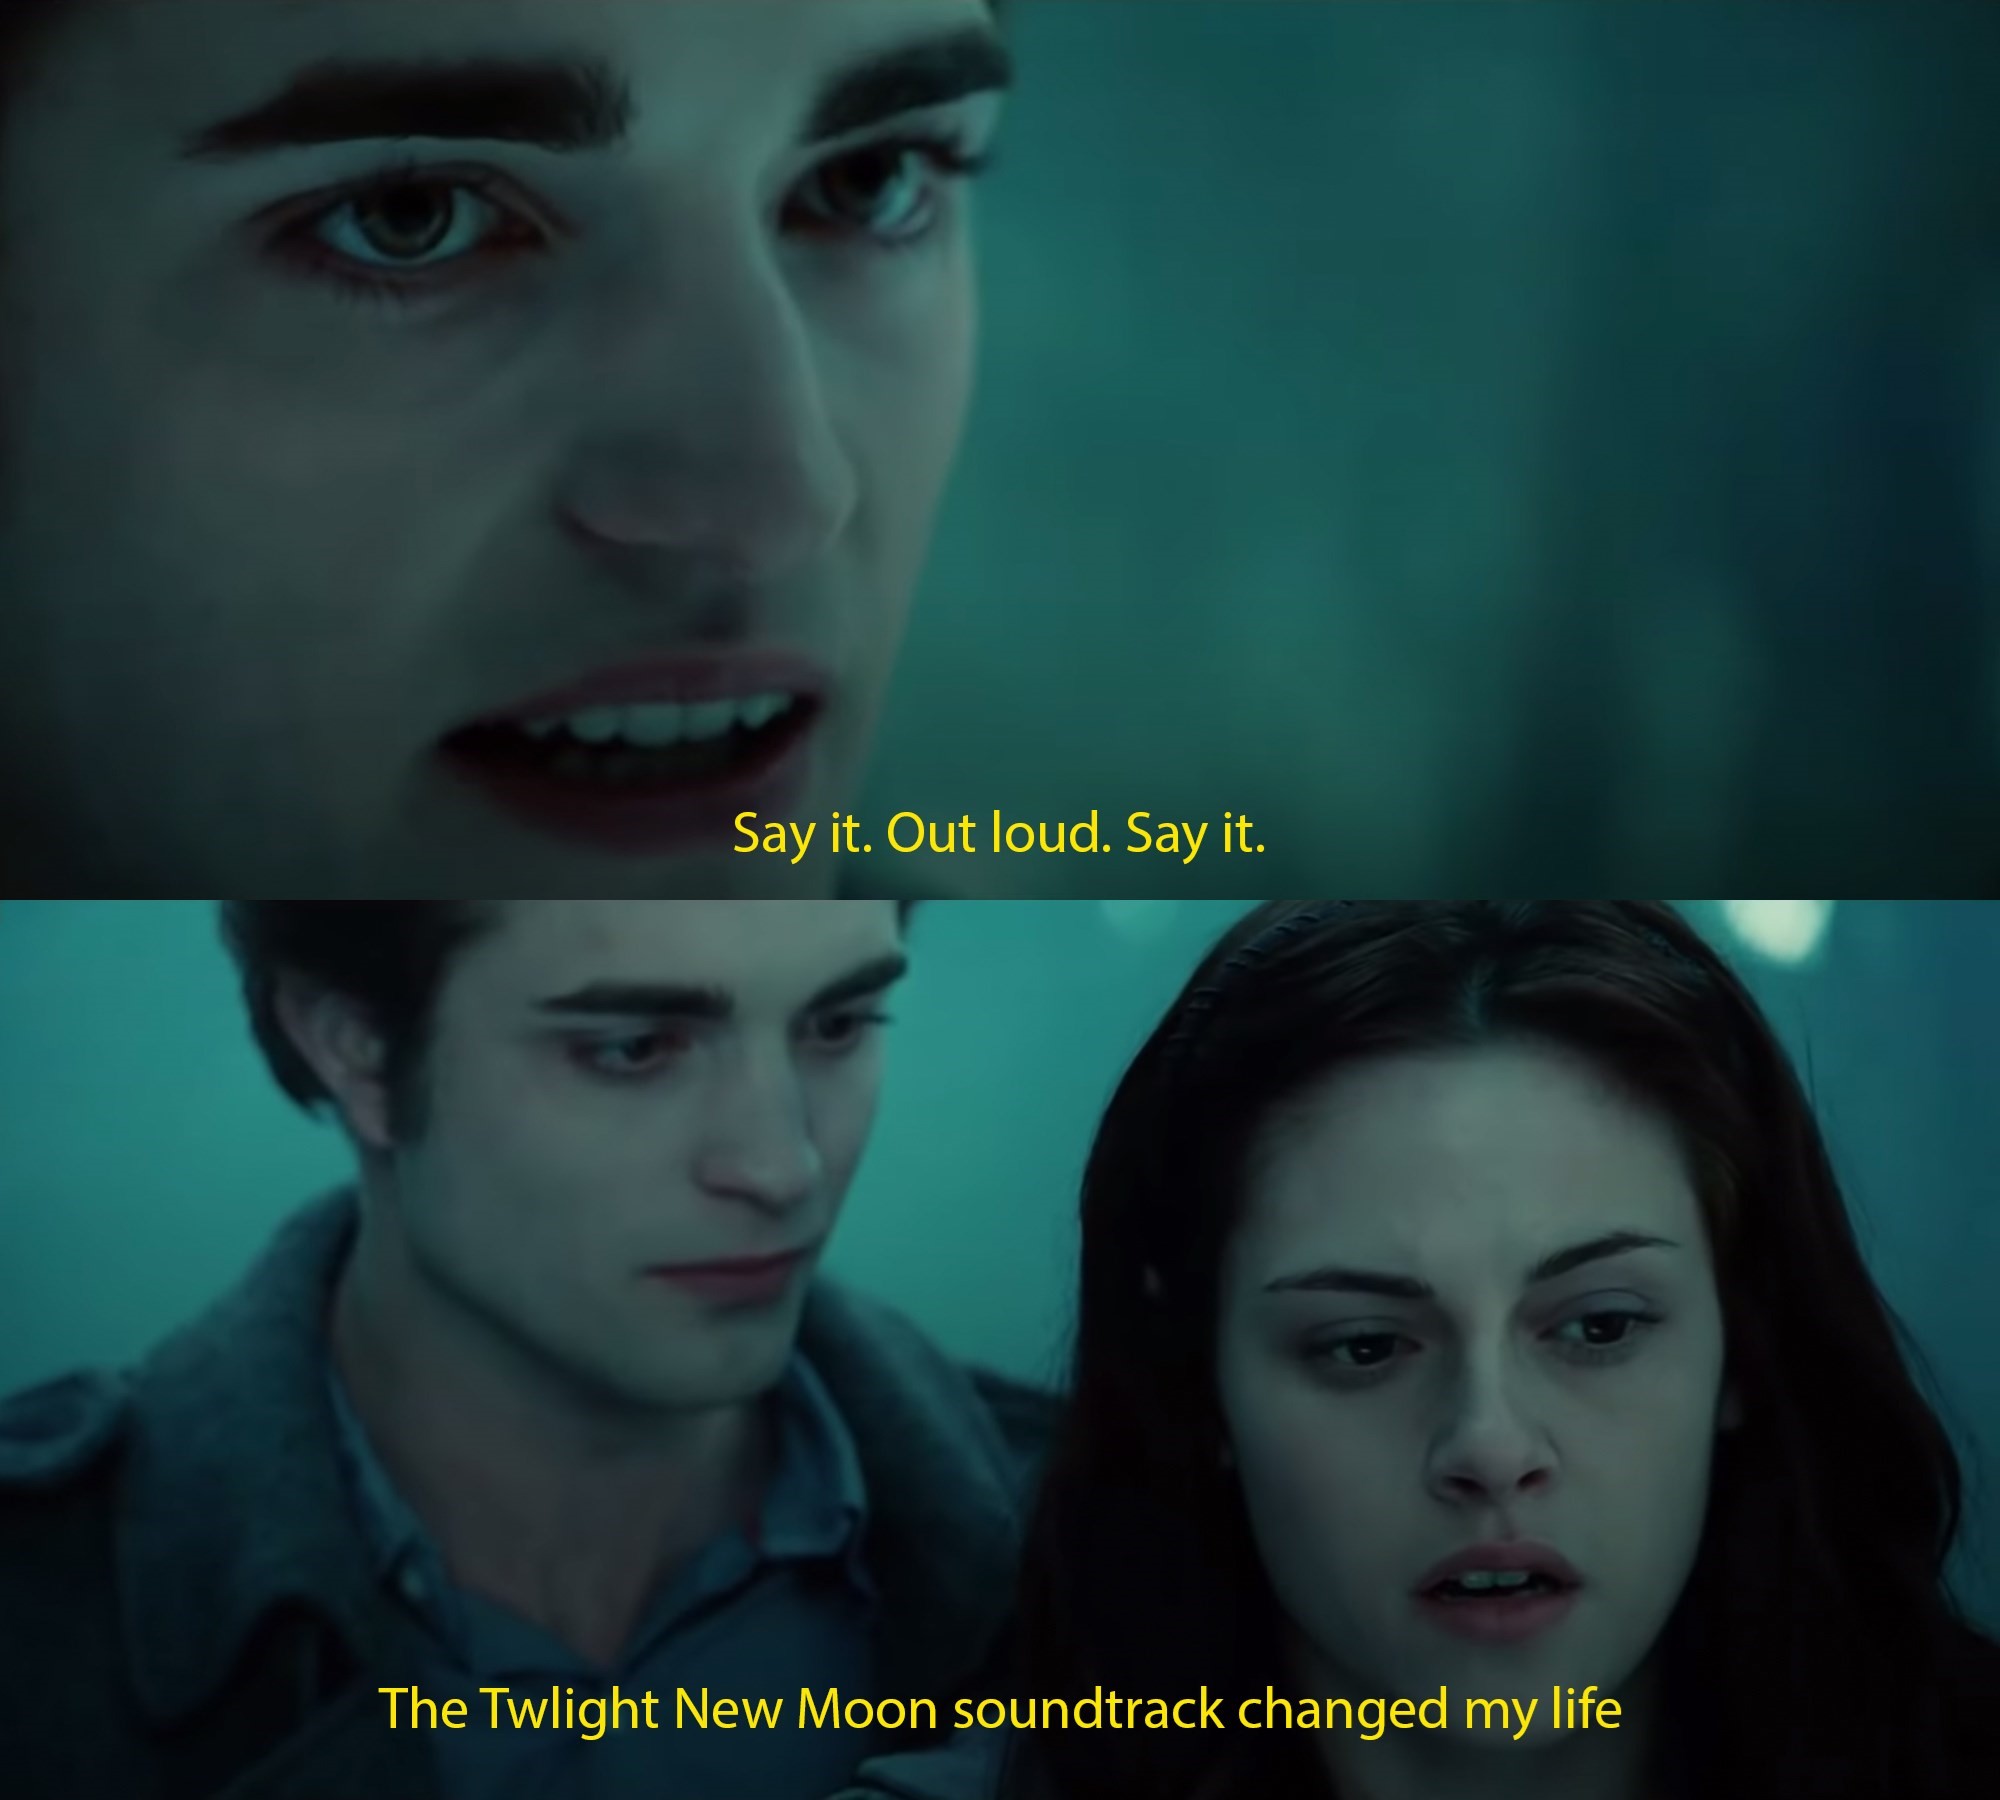 How the Twilight soundtracks defined a generation's music taste | Dazed